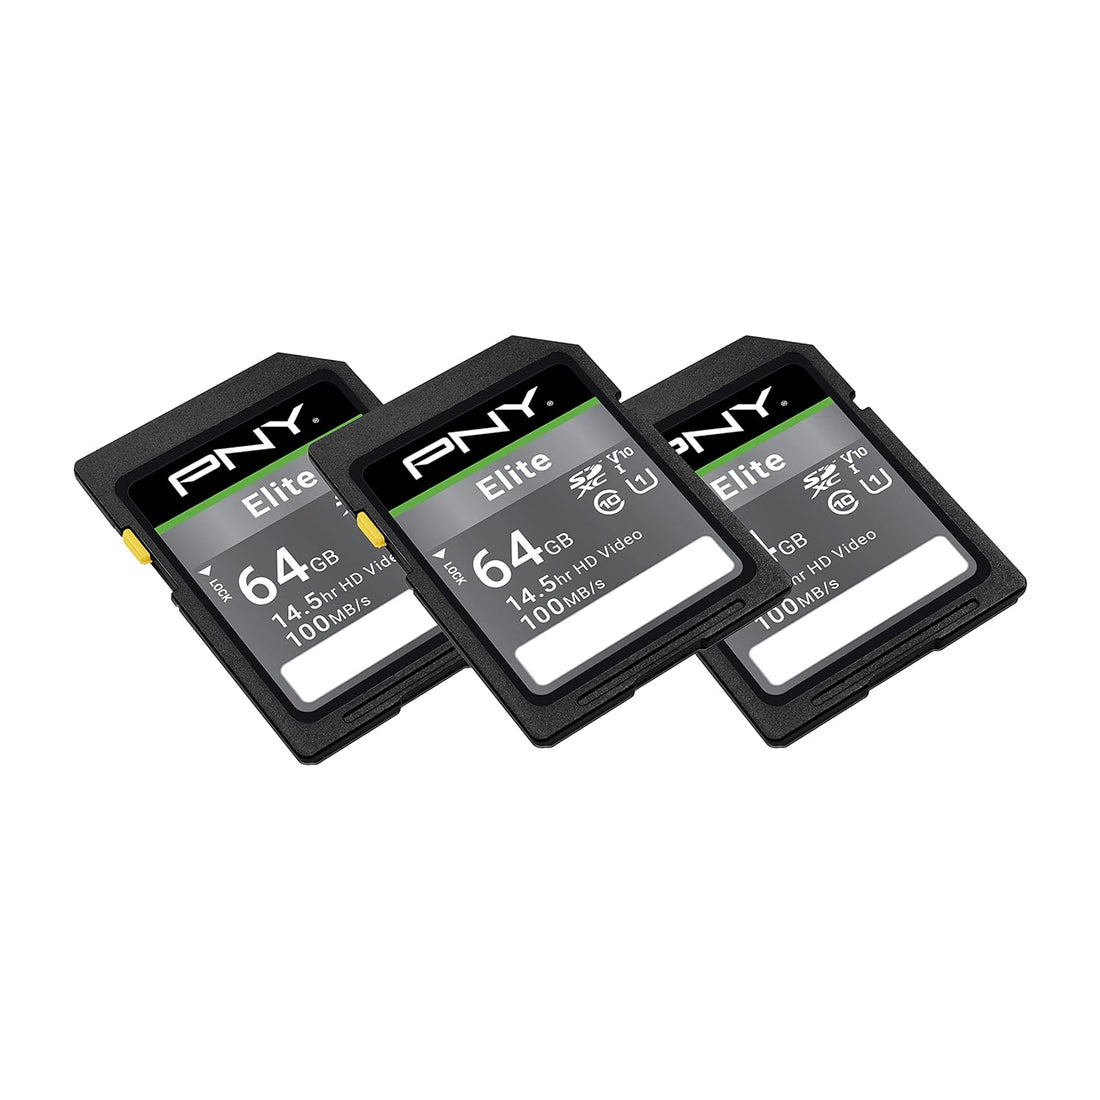 PNY 64GB Elite Class 10 U1 V10 SDXC Flash Memory Card 3-Pack - 100MB/s Read, Class 10, U1, V10, Full HD, UHS-I, Full Size SD (P-SD64GX3U1100EL-MP)